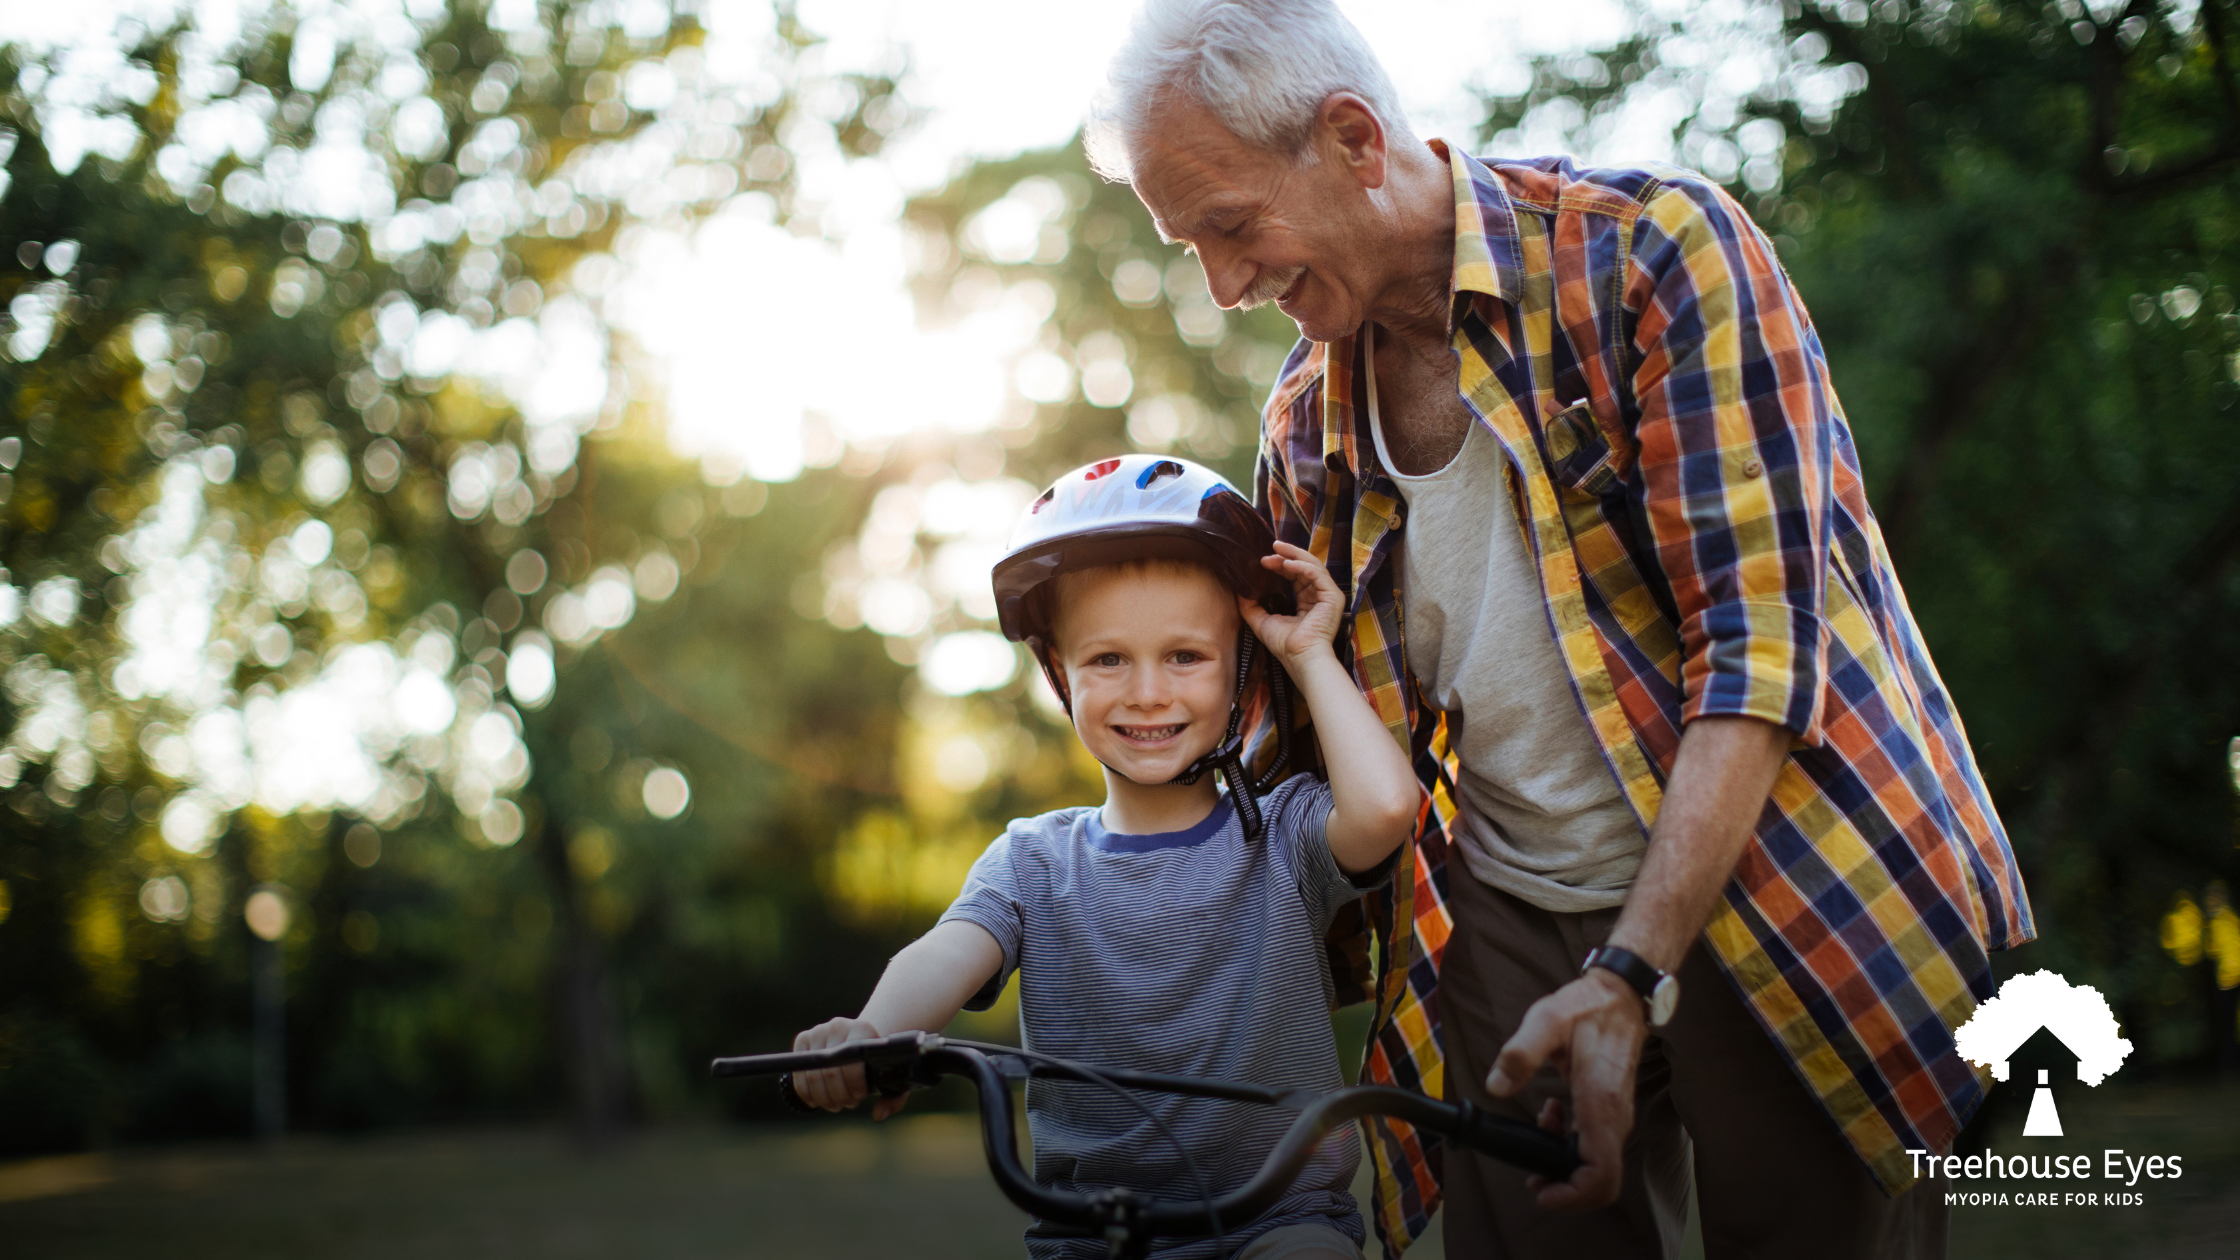 Kid riding bike with grandfather